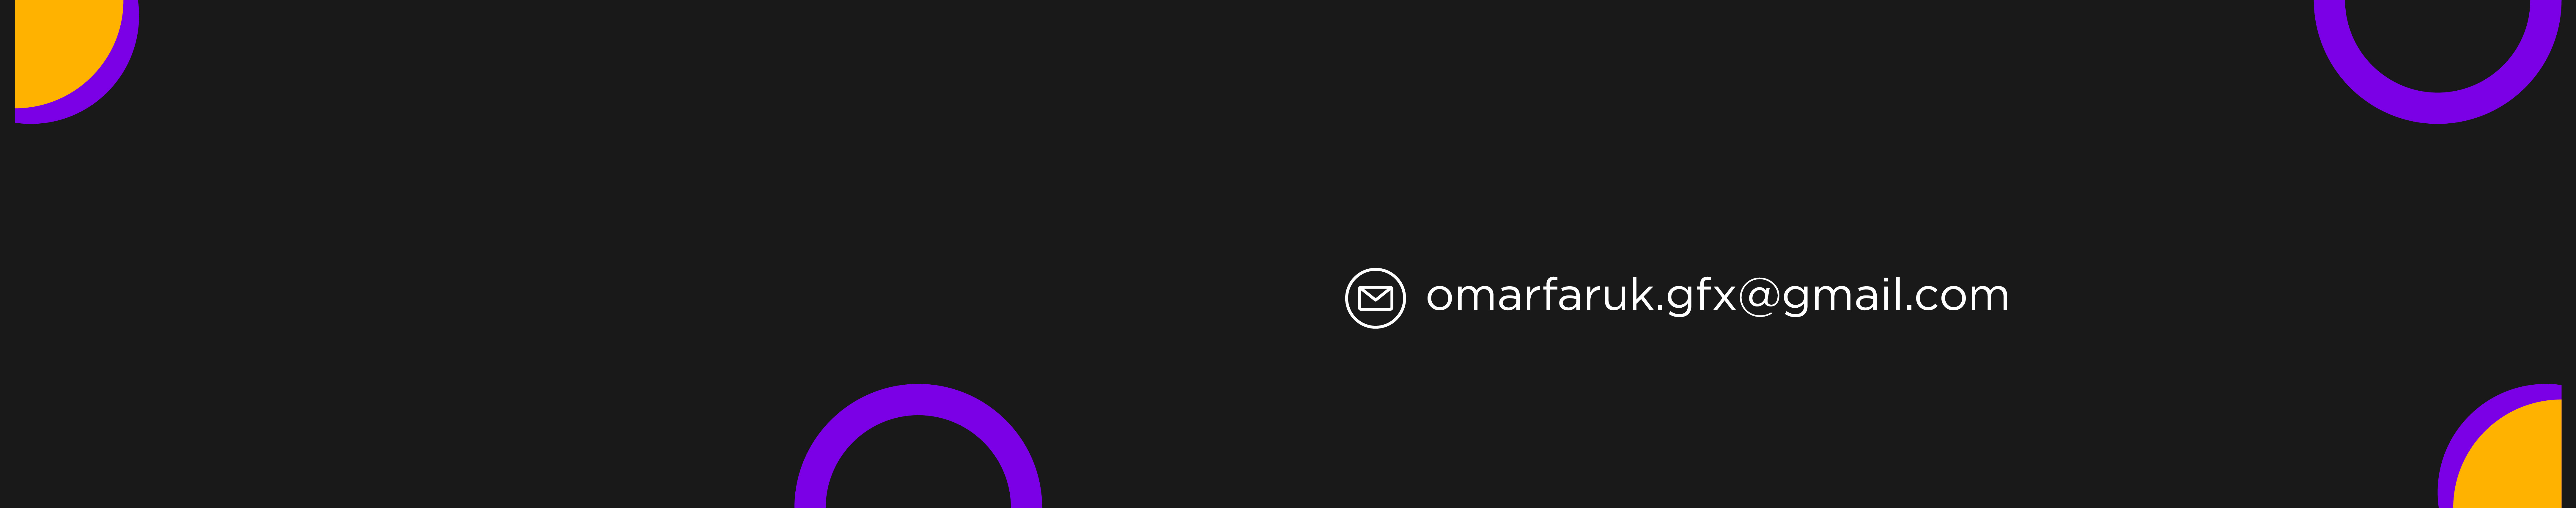 Omar Faruk's profile banner